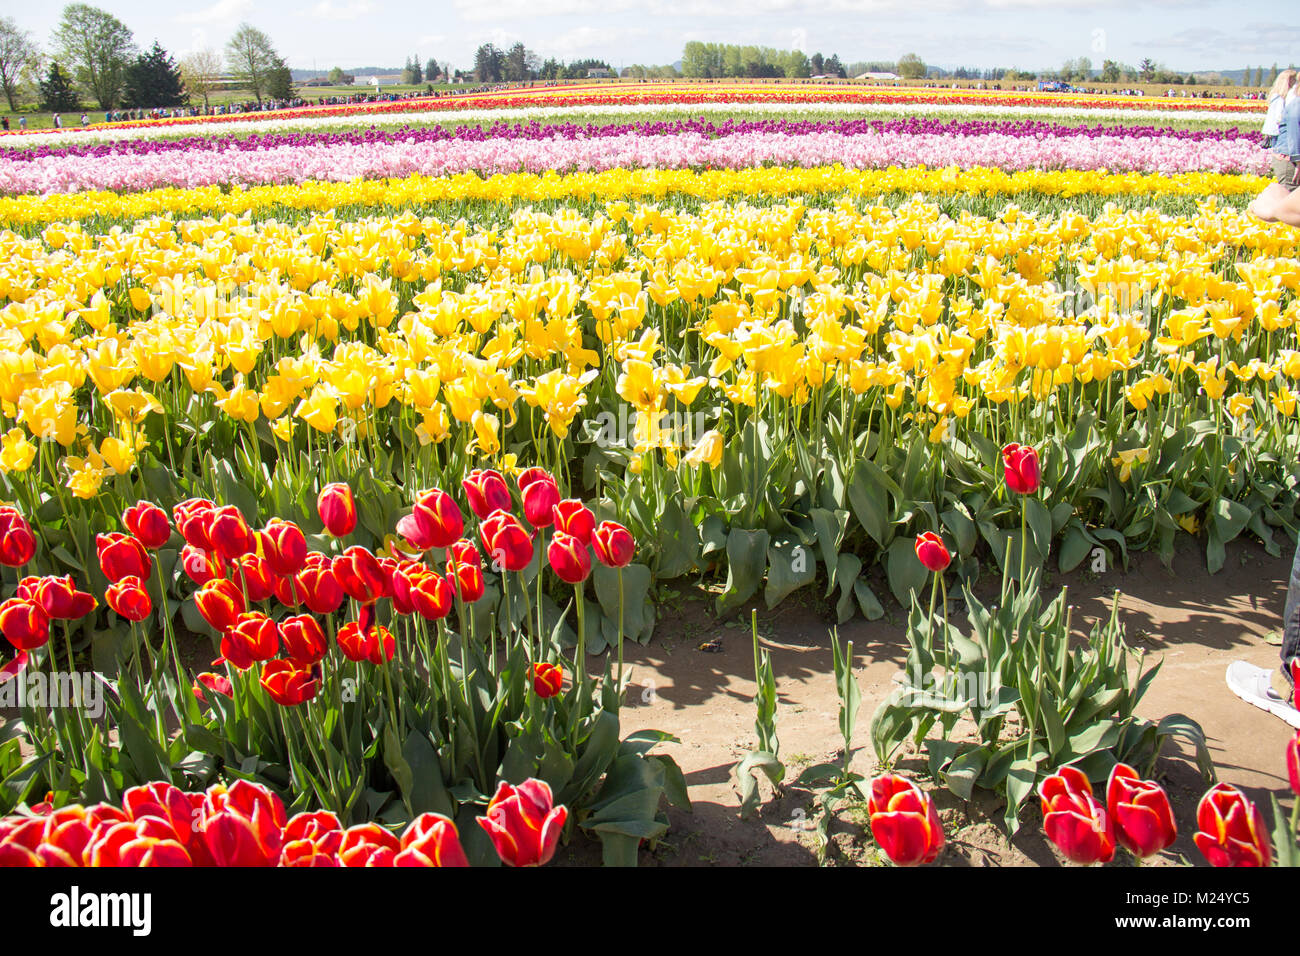 Skagit valley tulip festival in Mount Vernon Washington State Stock ...